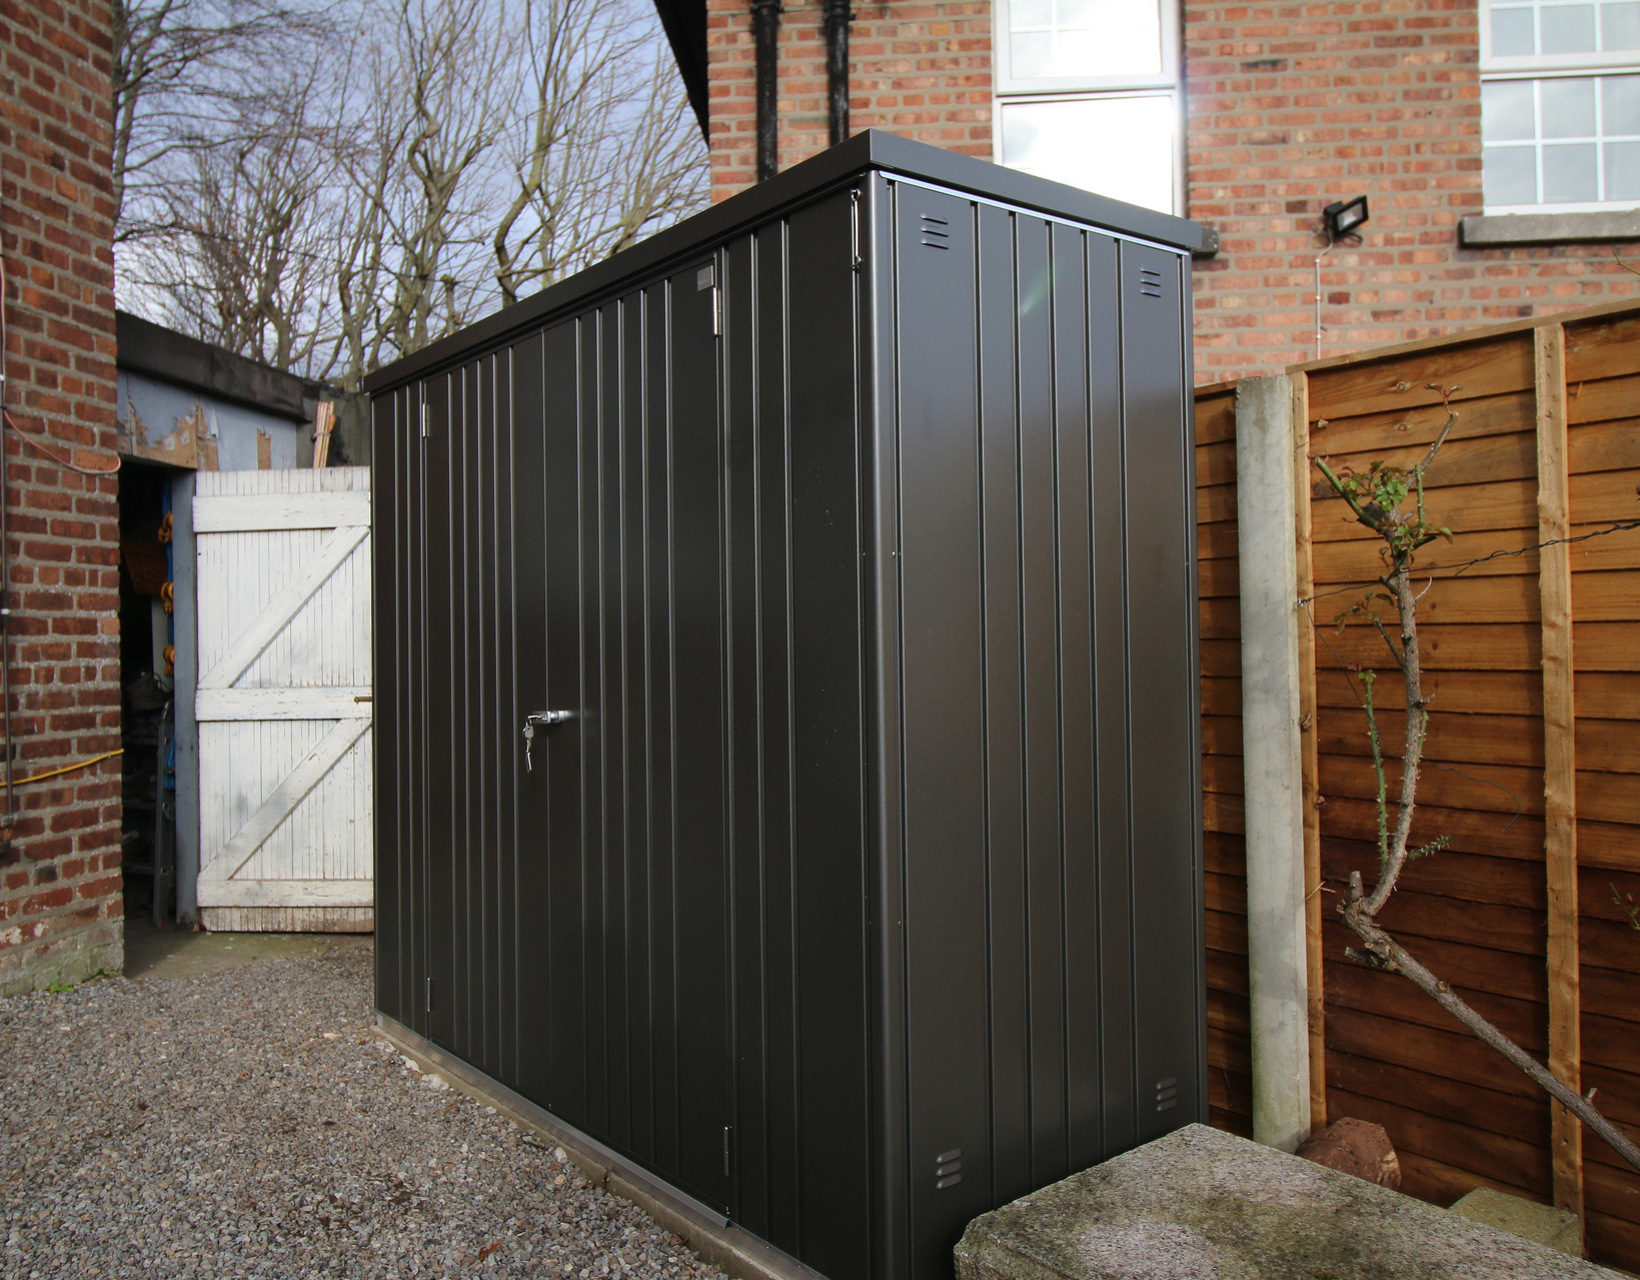 Biohort Equipment Locker 230 in metallic dark grey, supplied + fitted in Dublin 12 | Stylish, Versatile, Secure & Rainproof Patio Storage Solutions | FREE Fitting